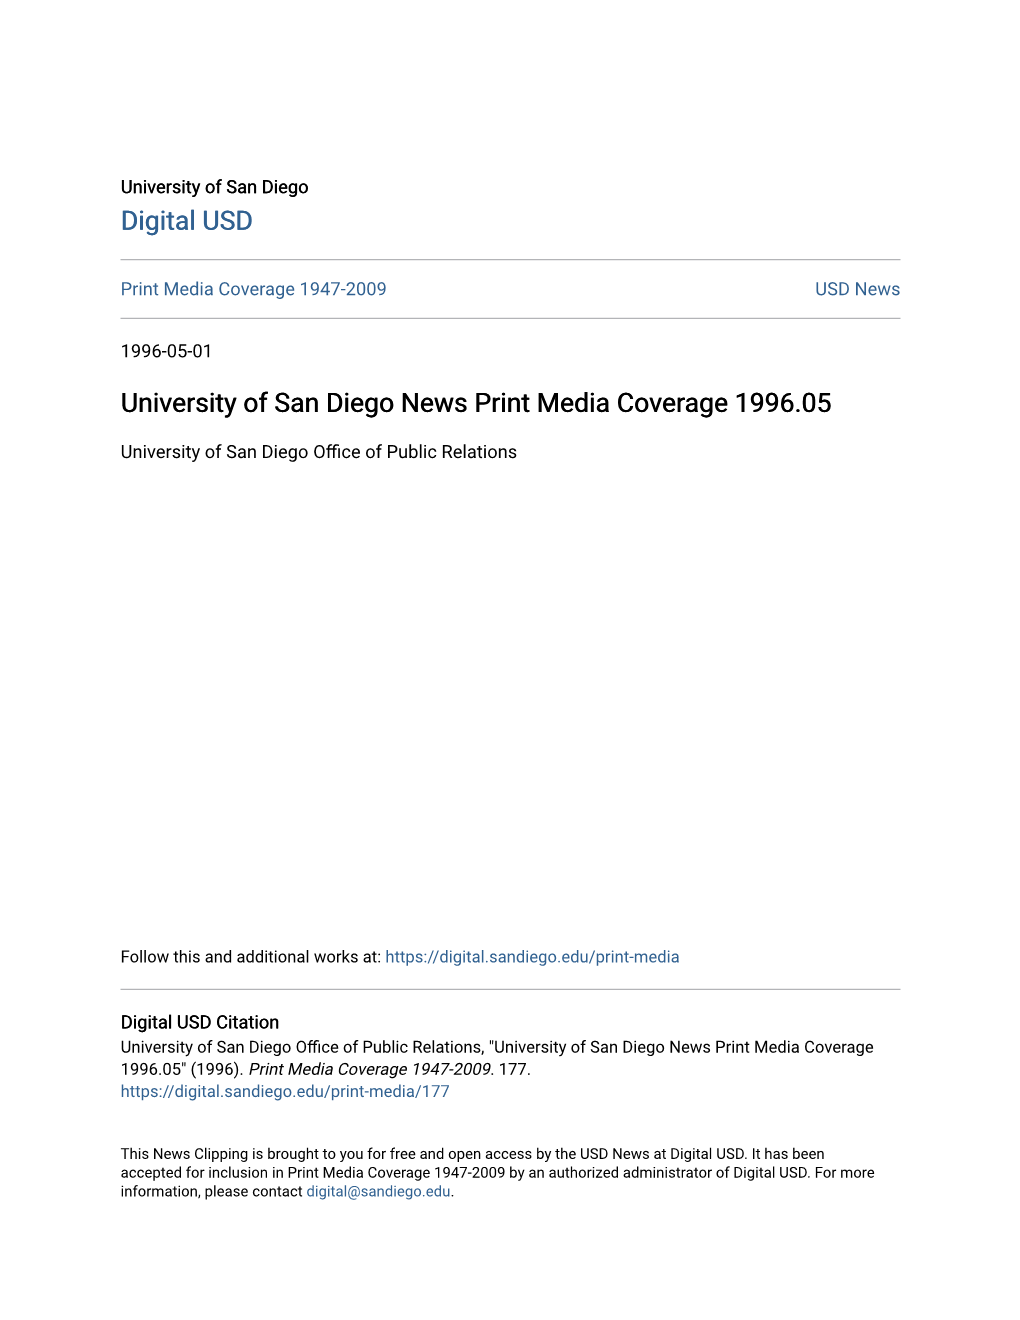 University of San Diego News Print Media Coverage 1996.05